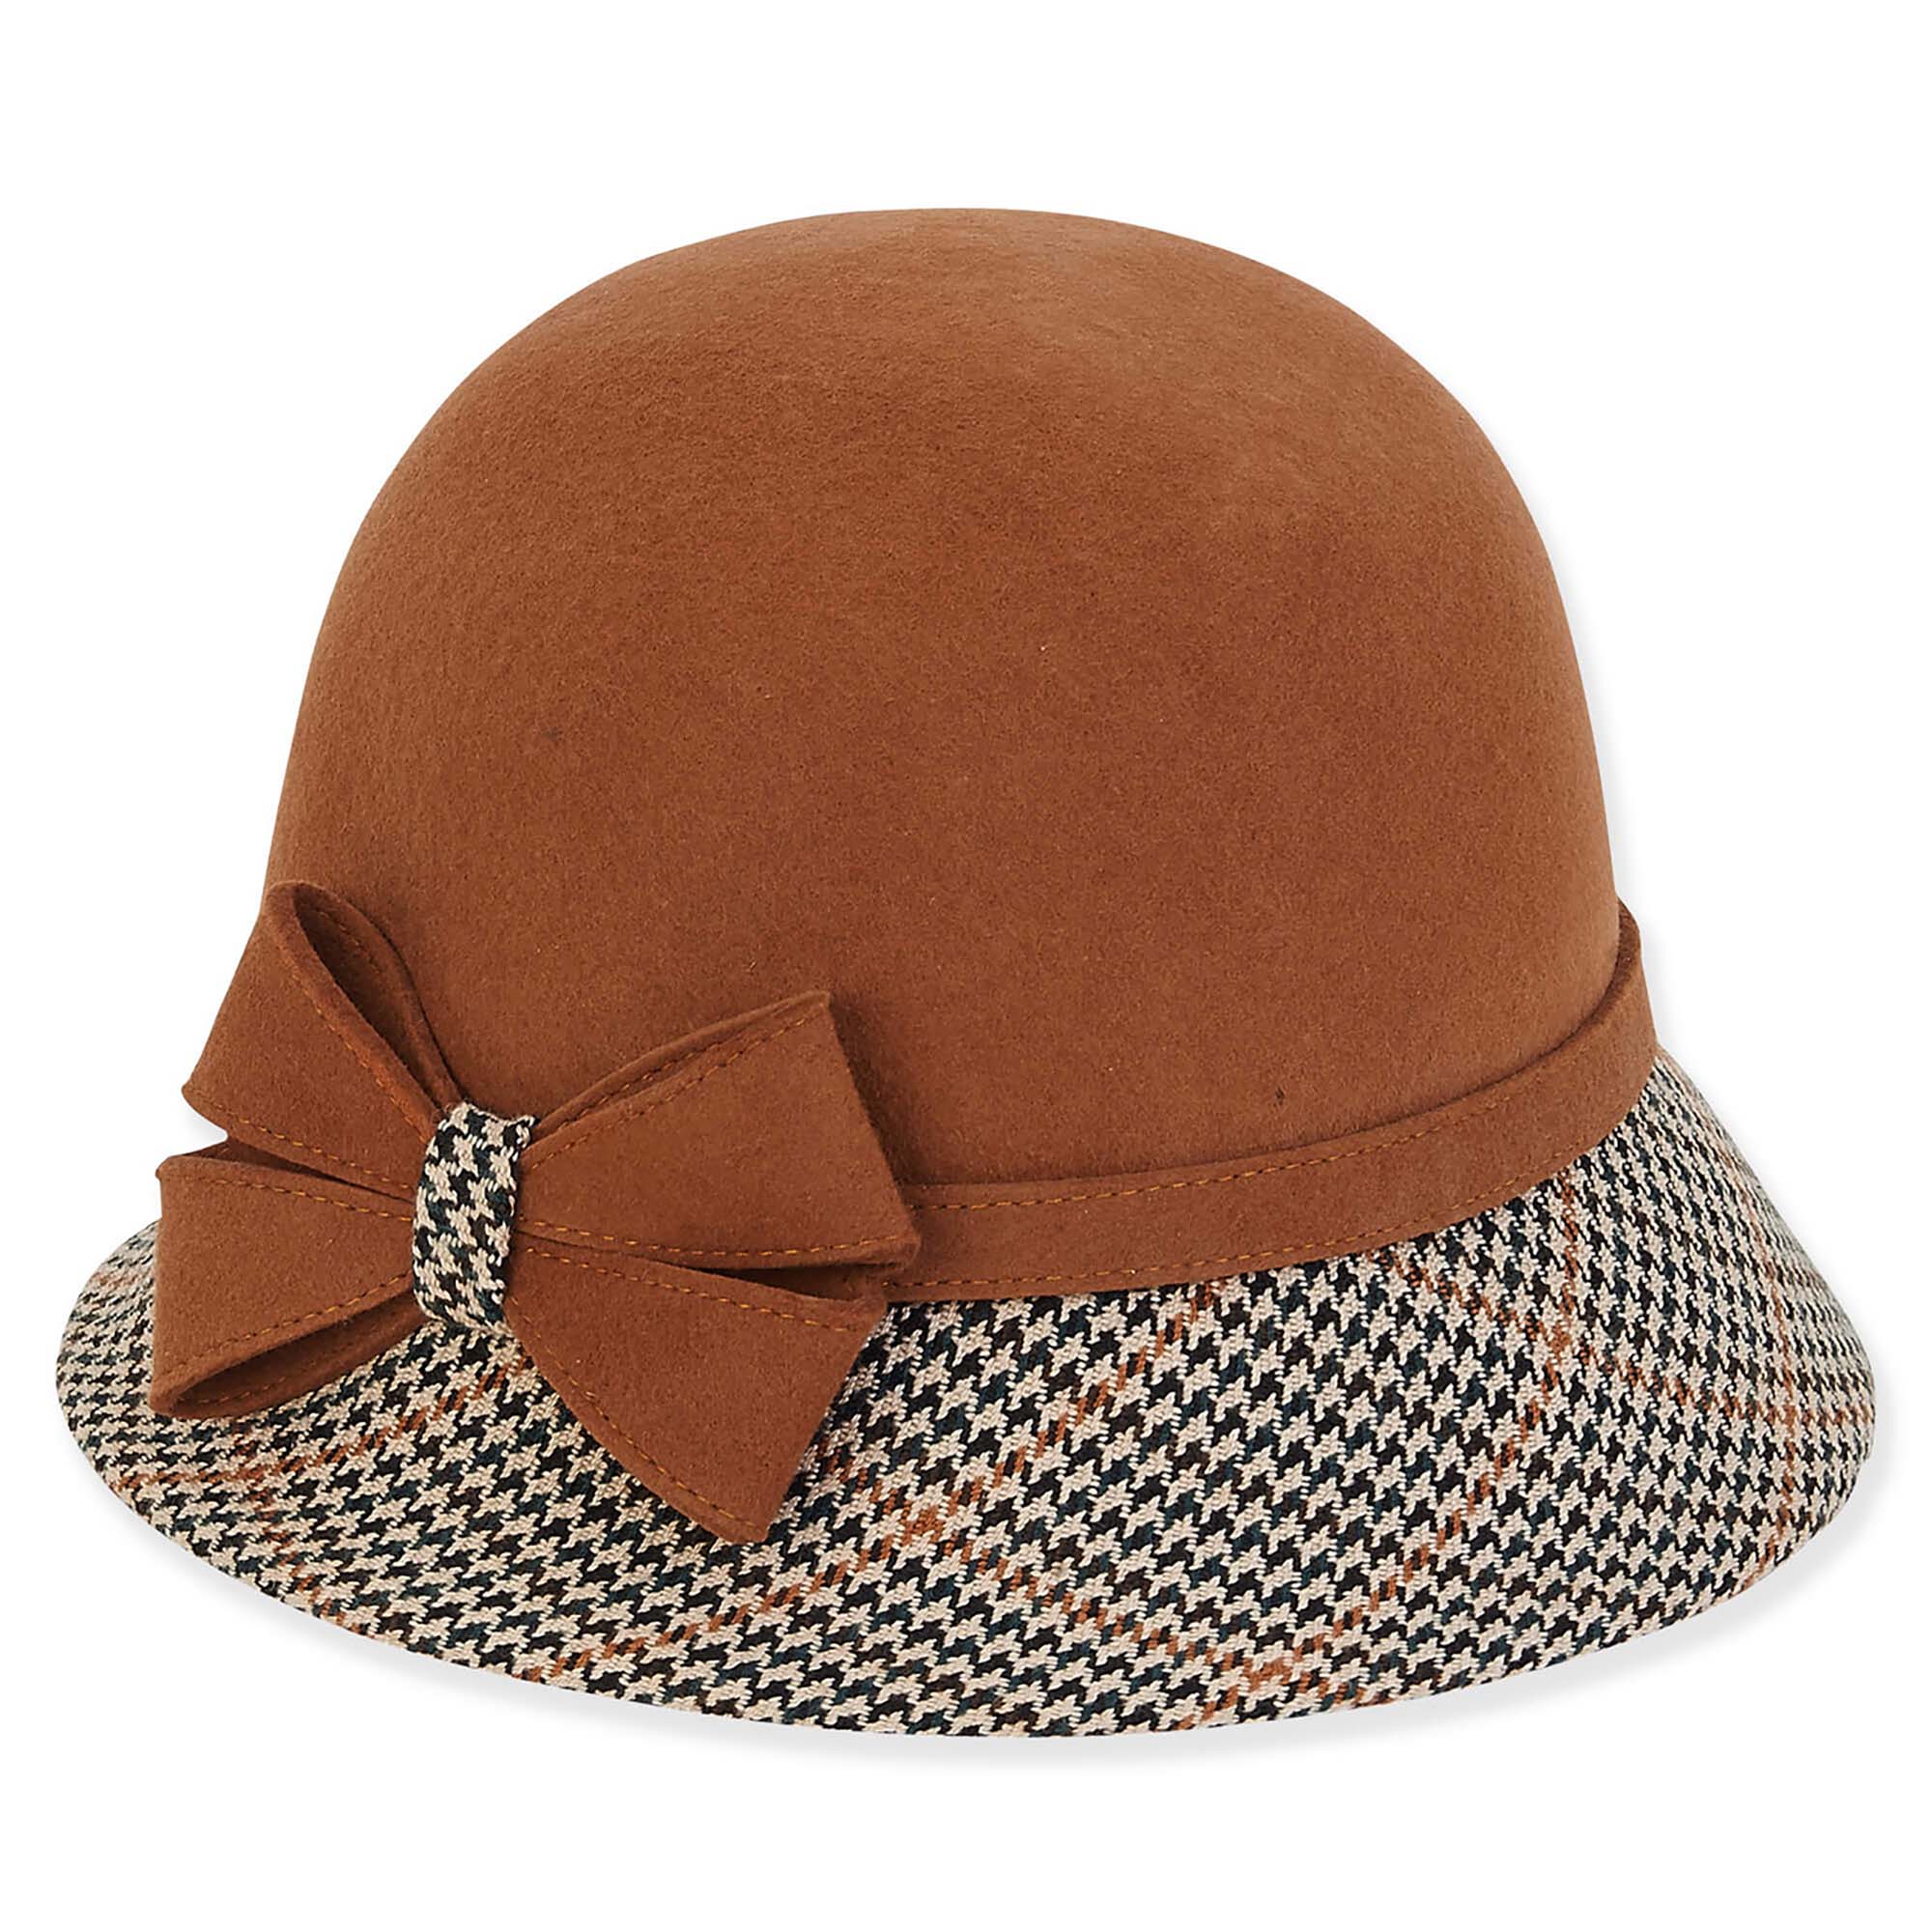 Adora® Wool Hat - Wool Felt Cloche with Houndstooth Brim Cloche Adora Hats AD1422A Brown OS 